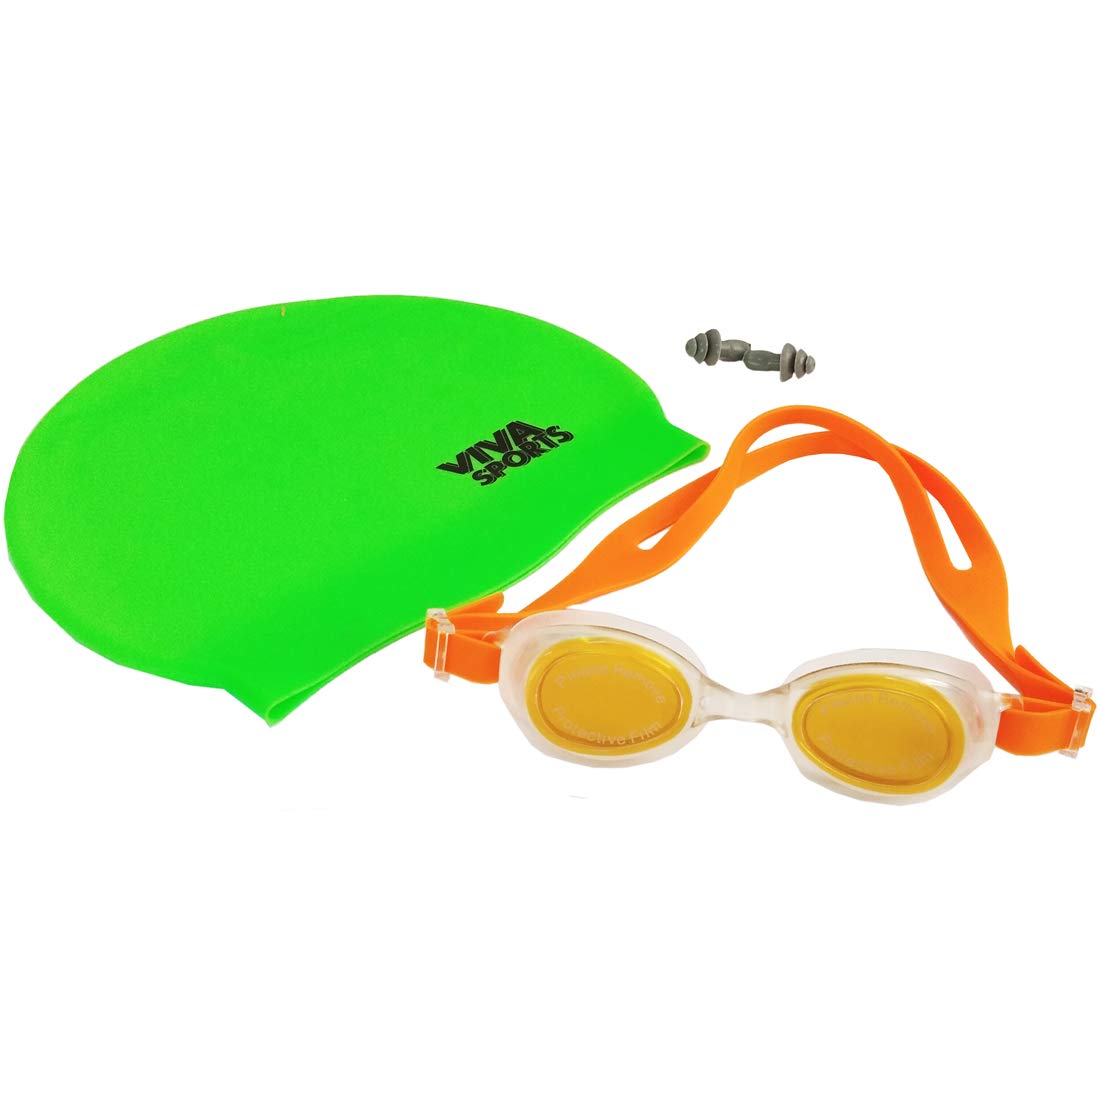 Senior Sports Swimming Set (Cap + Goggles + Earplugs) - Best Price online Prokicksports.com